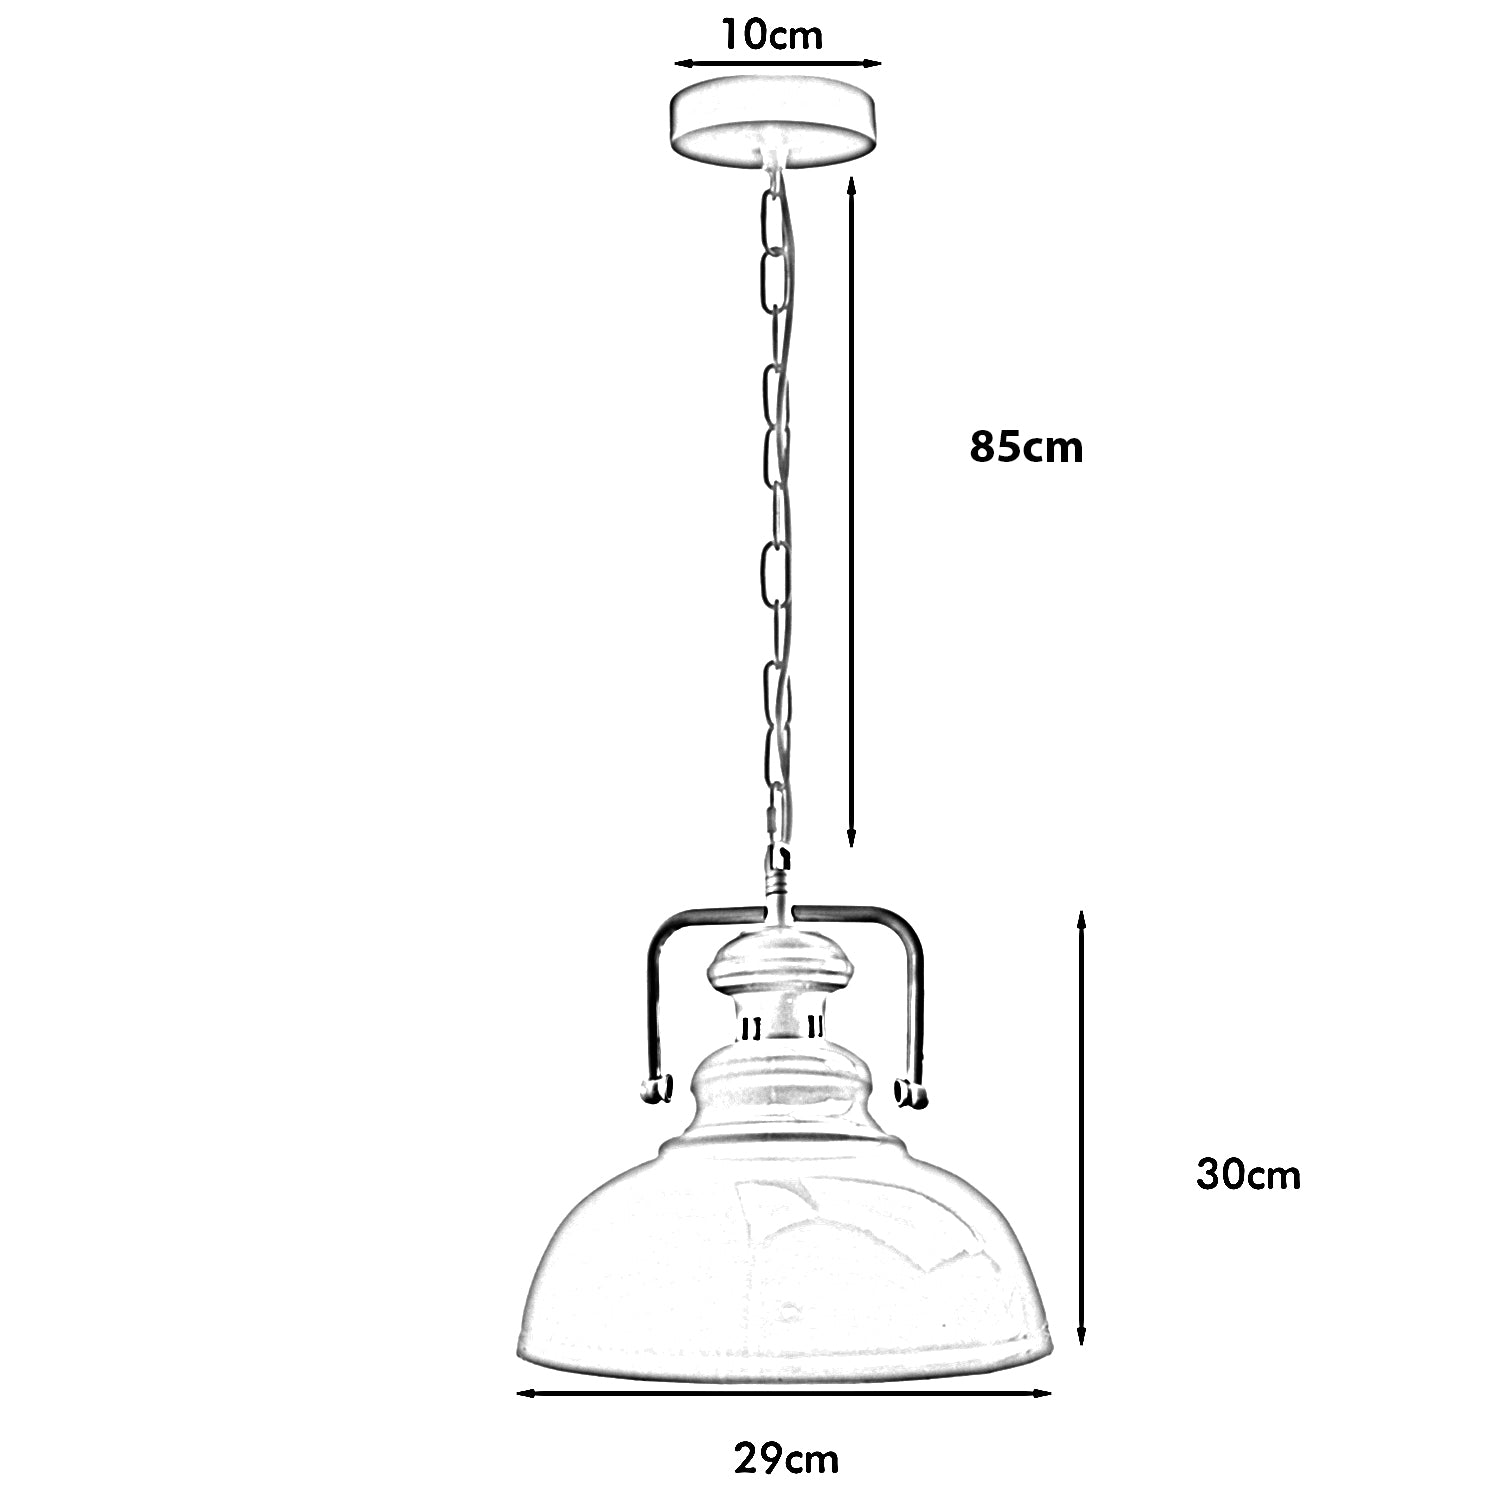 Adjustable chain hanging pendant light